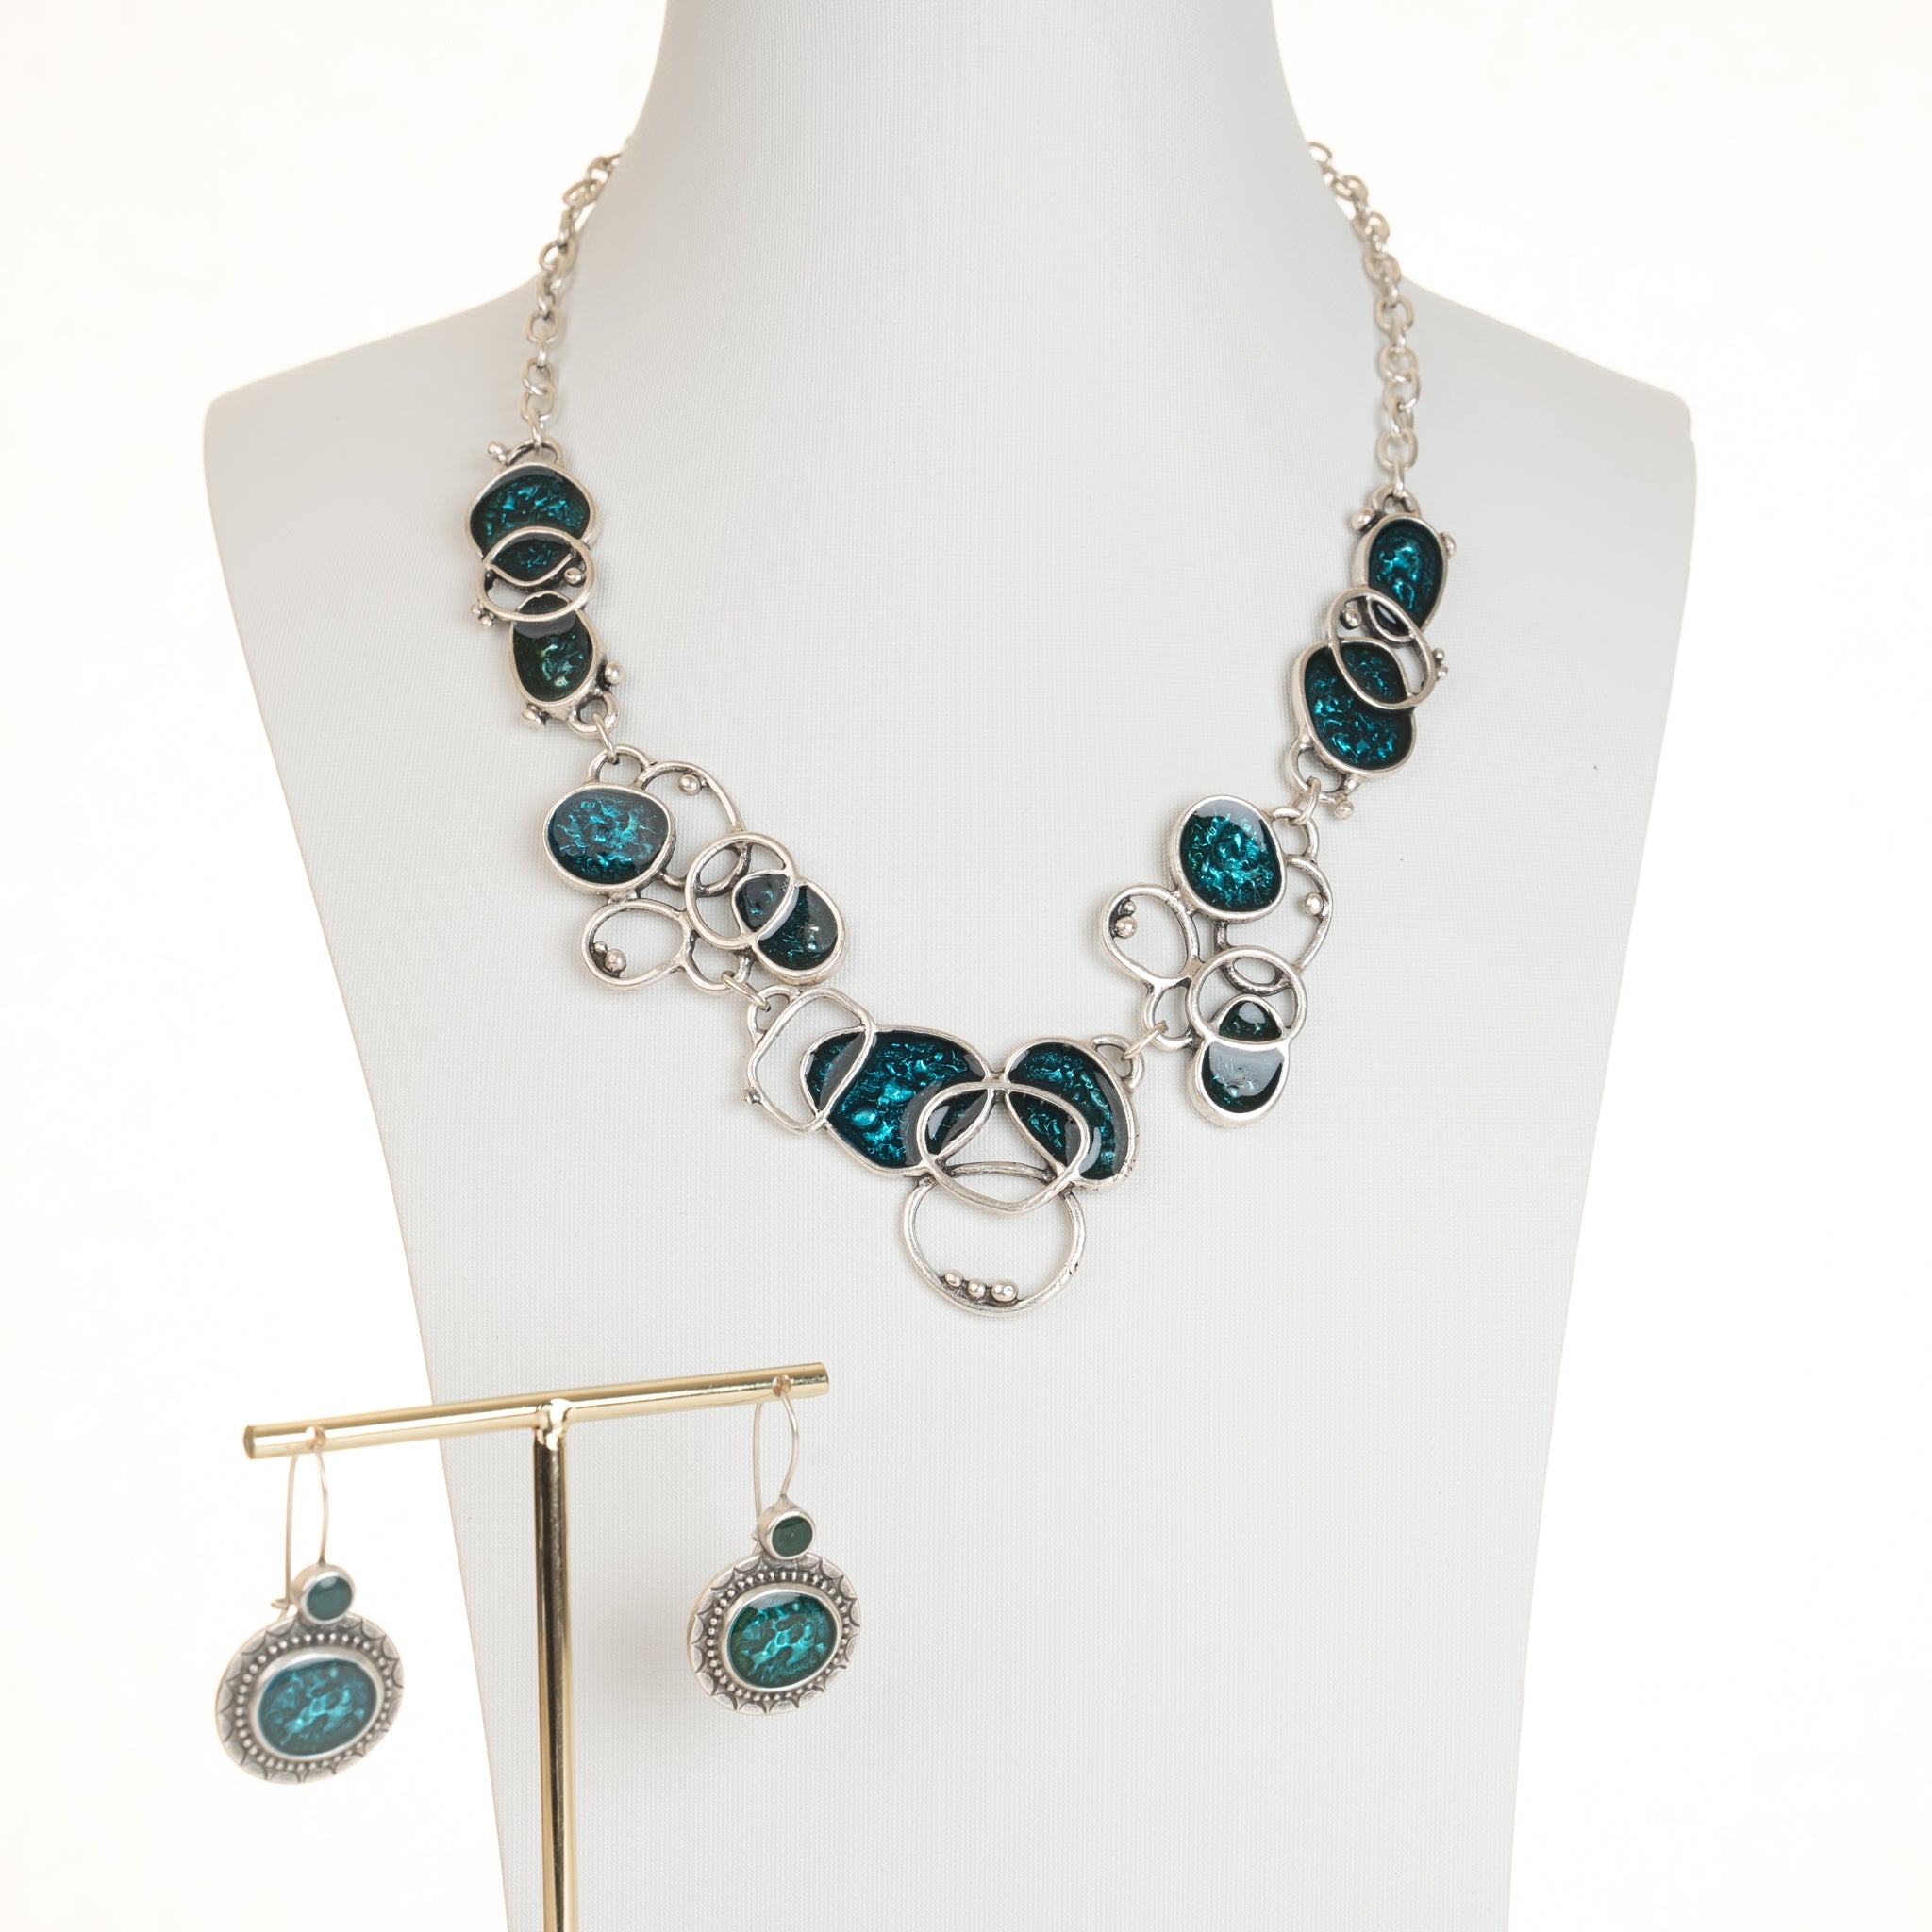 Euphoria Blue Necklace and earrings Set - Cherry Blossom